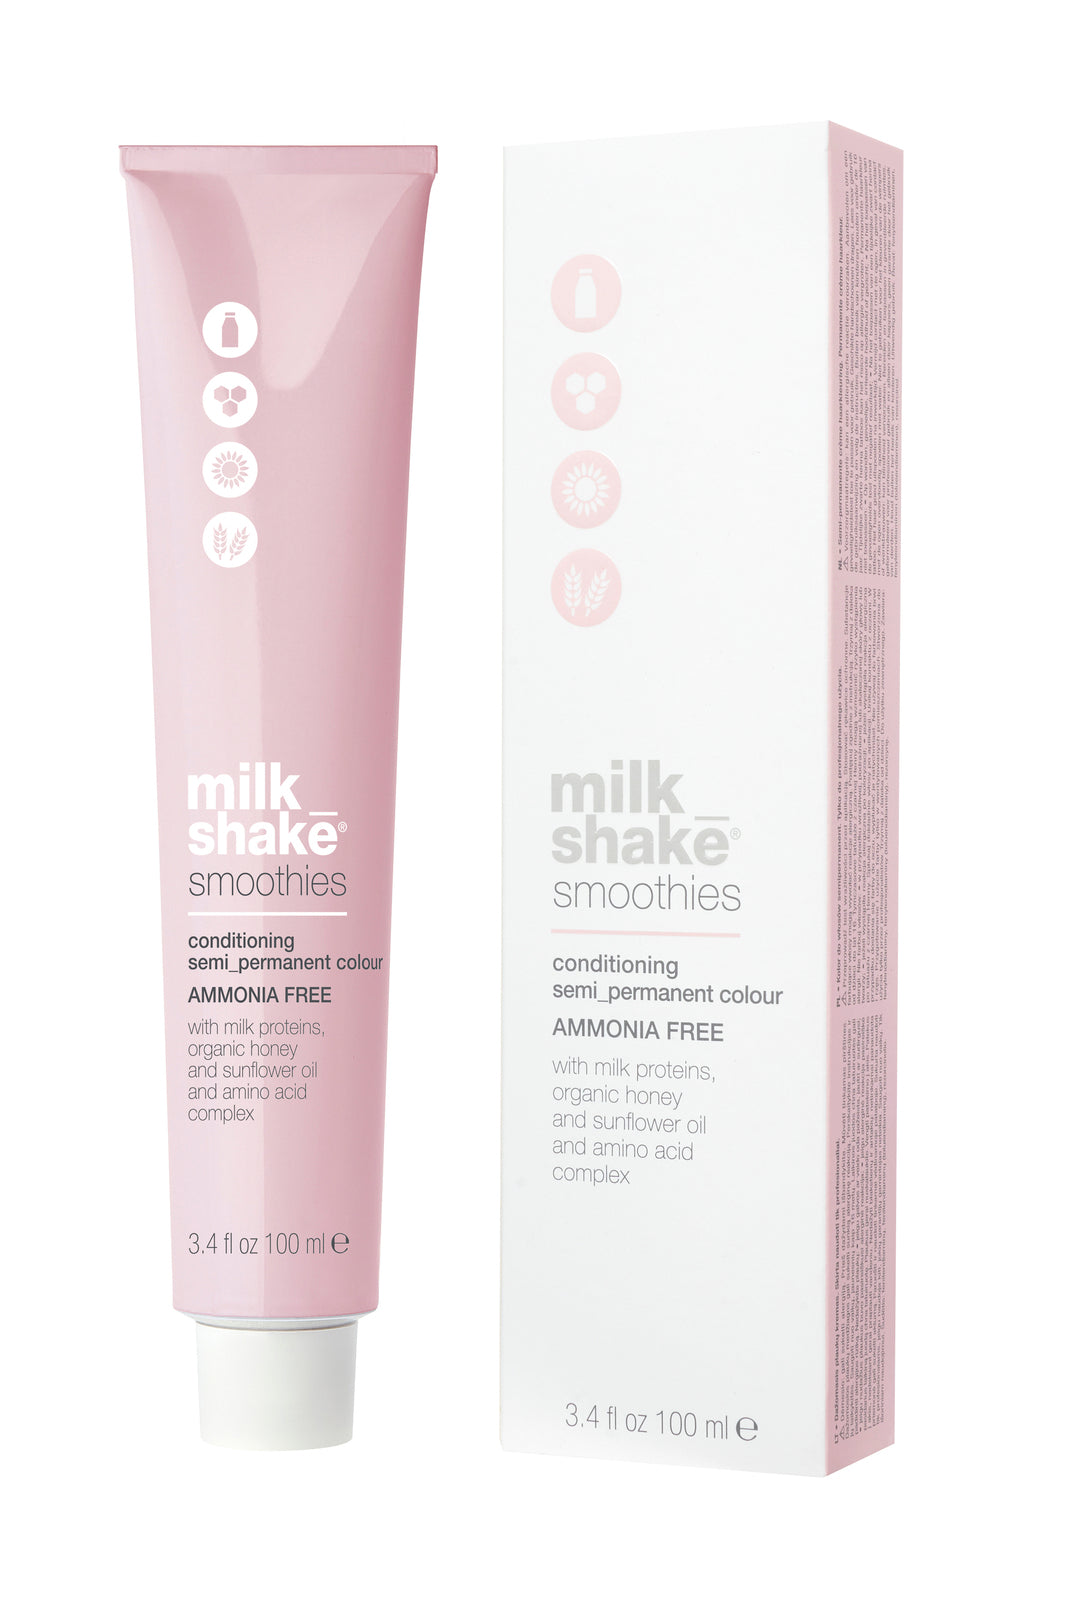 Milkshake smoothies semi-permanent color 6.3